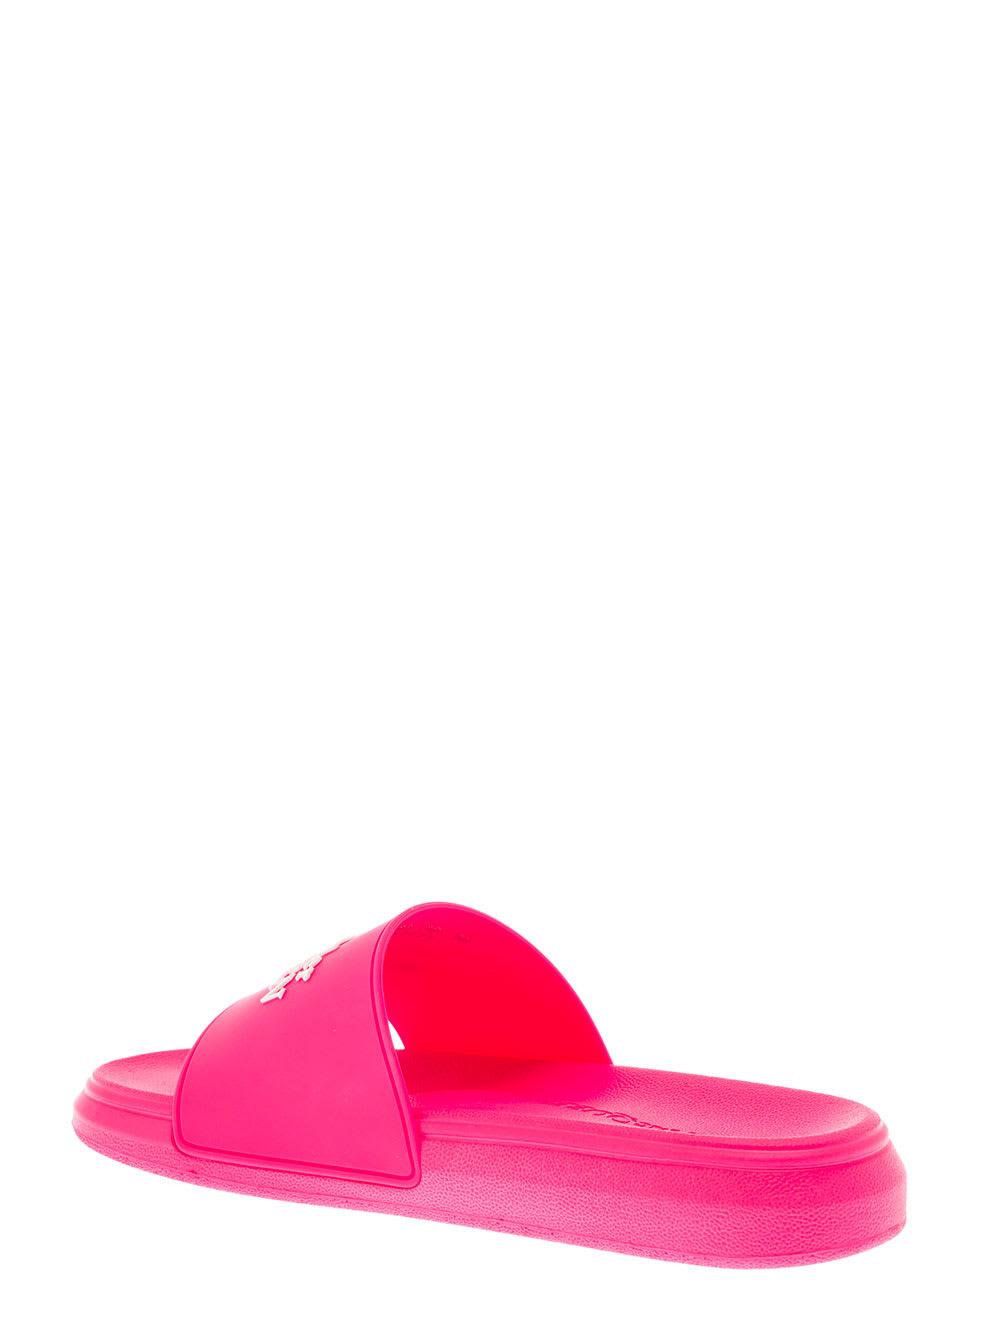 Alexander McQueen Women's Pink Rubber Slide Sandals - Save 72% | Lyst